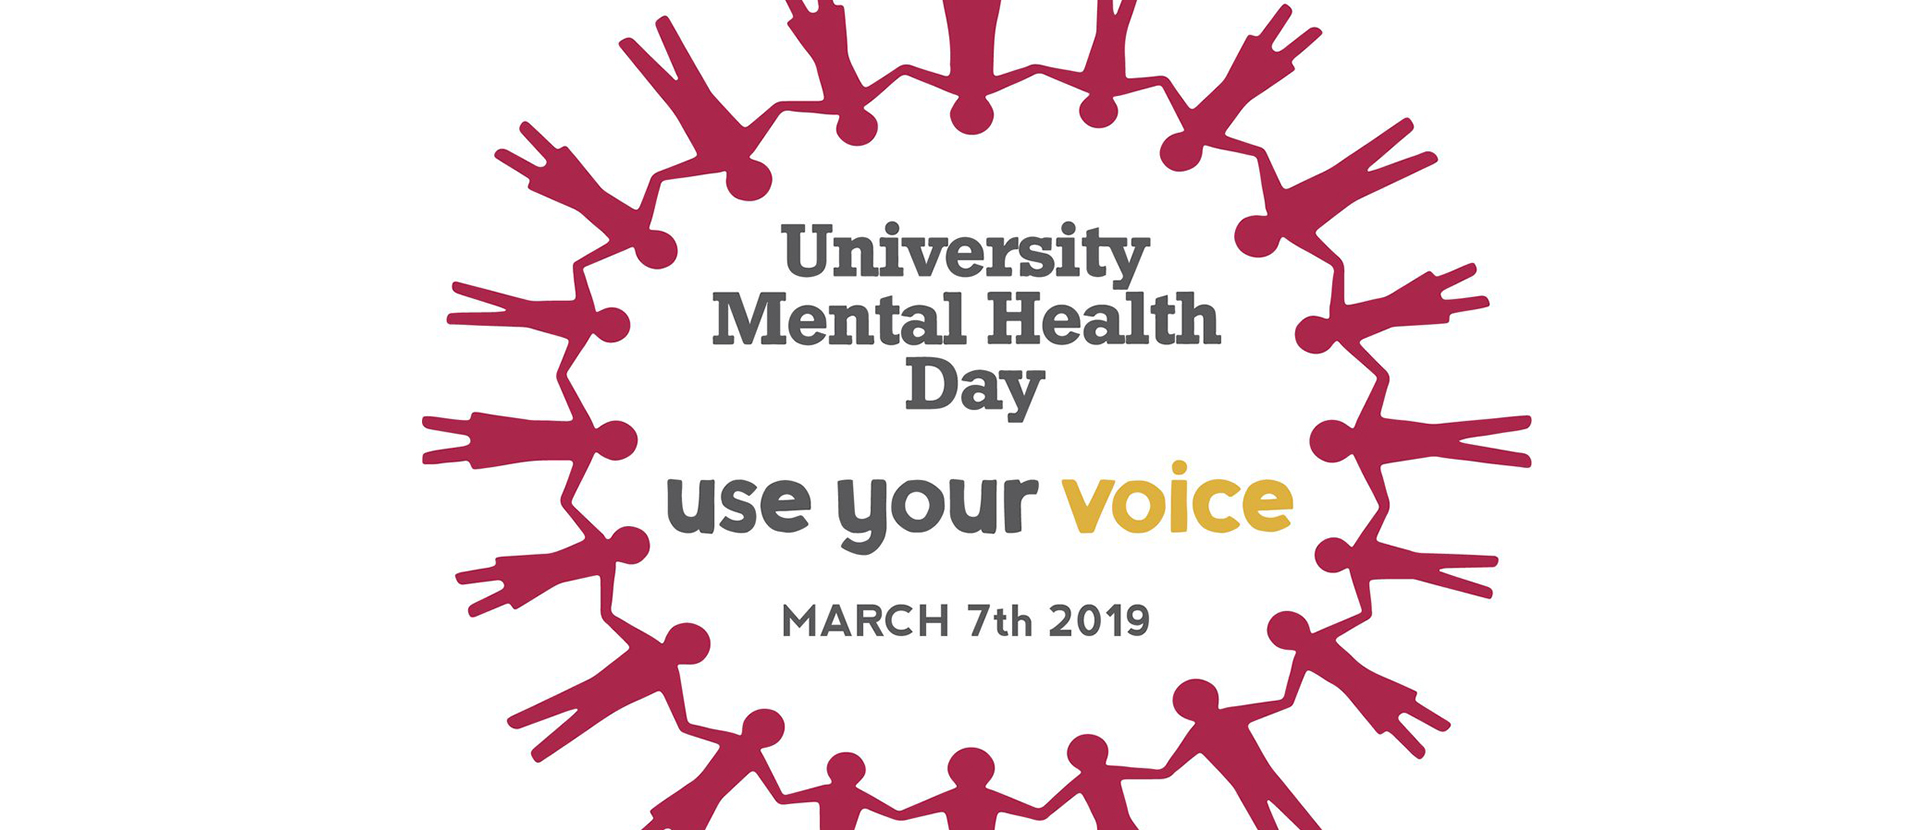 University mental health day logo